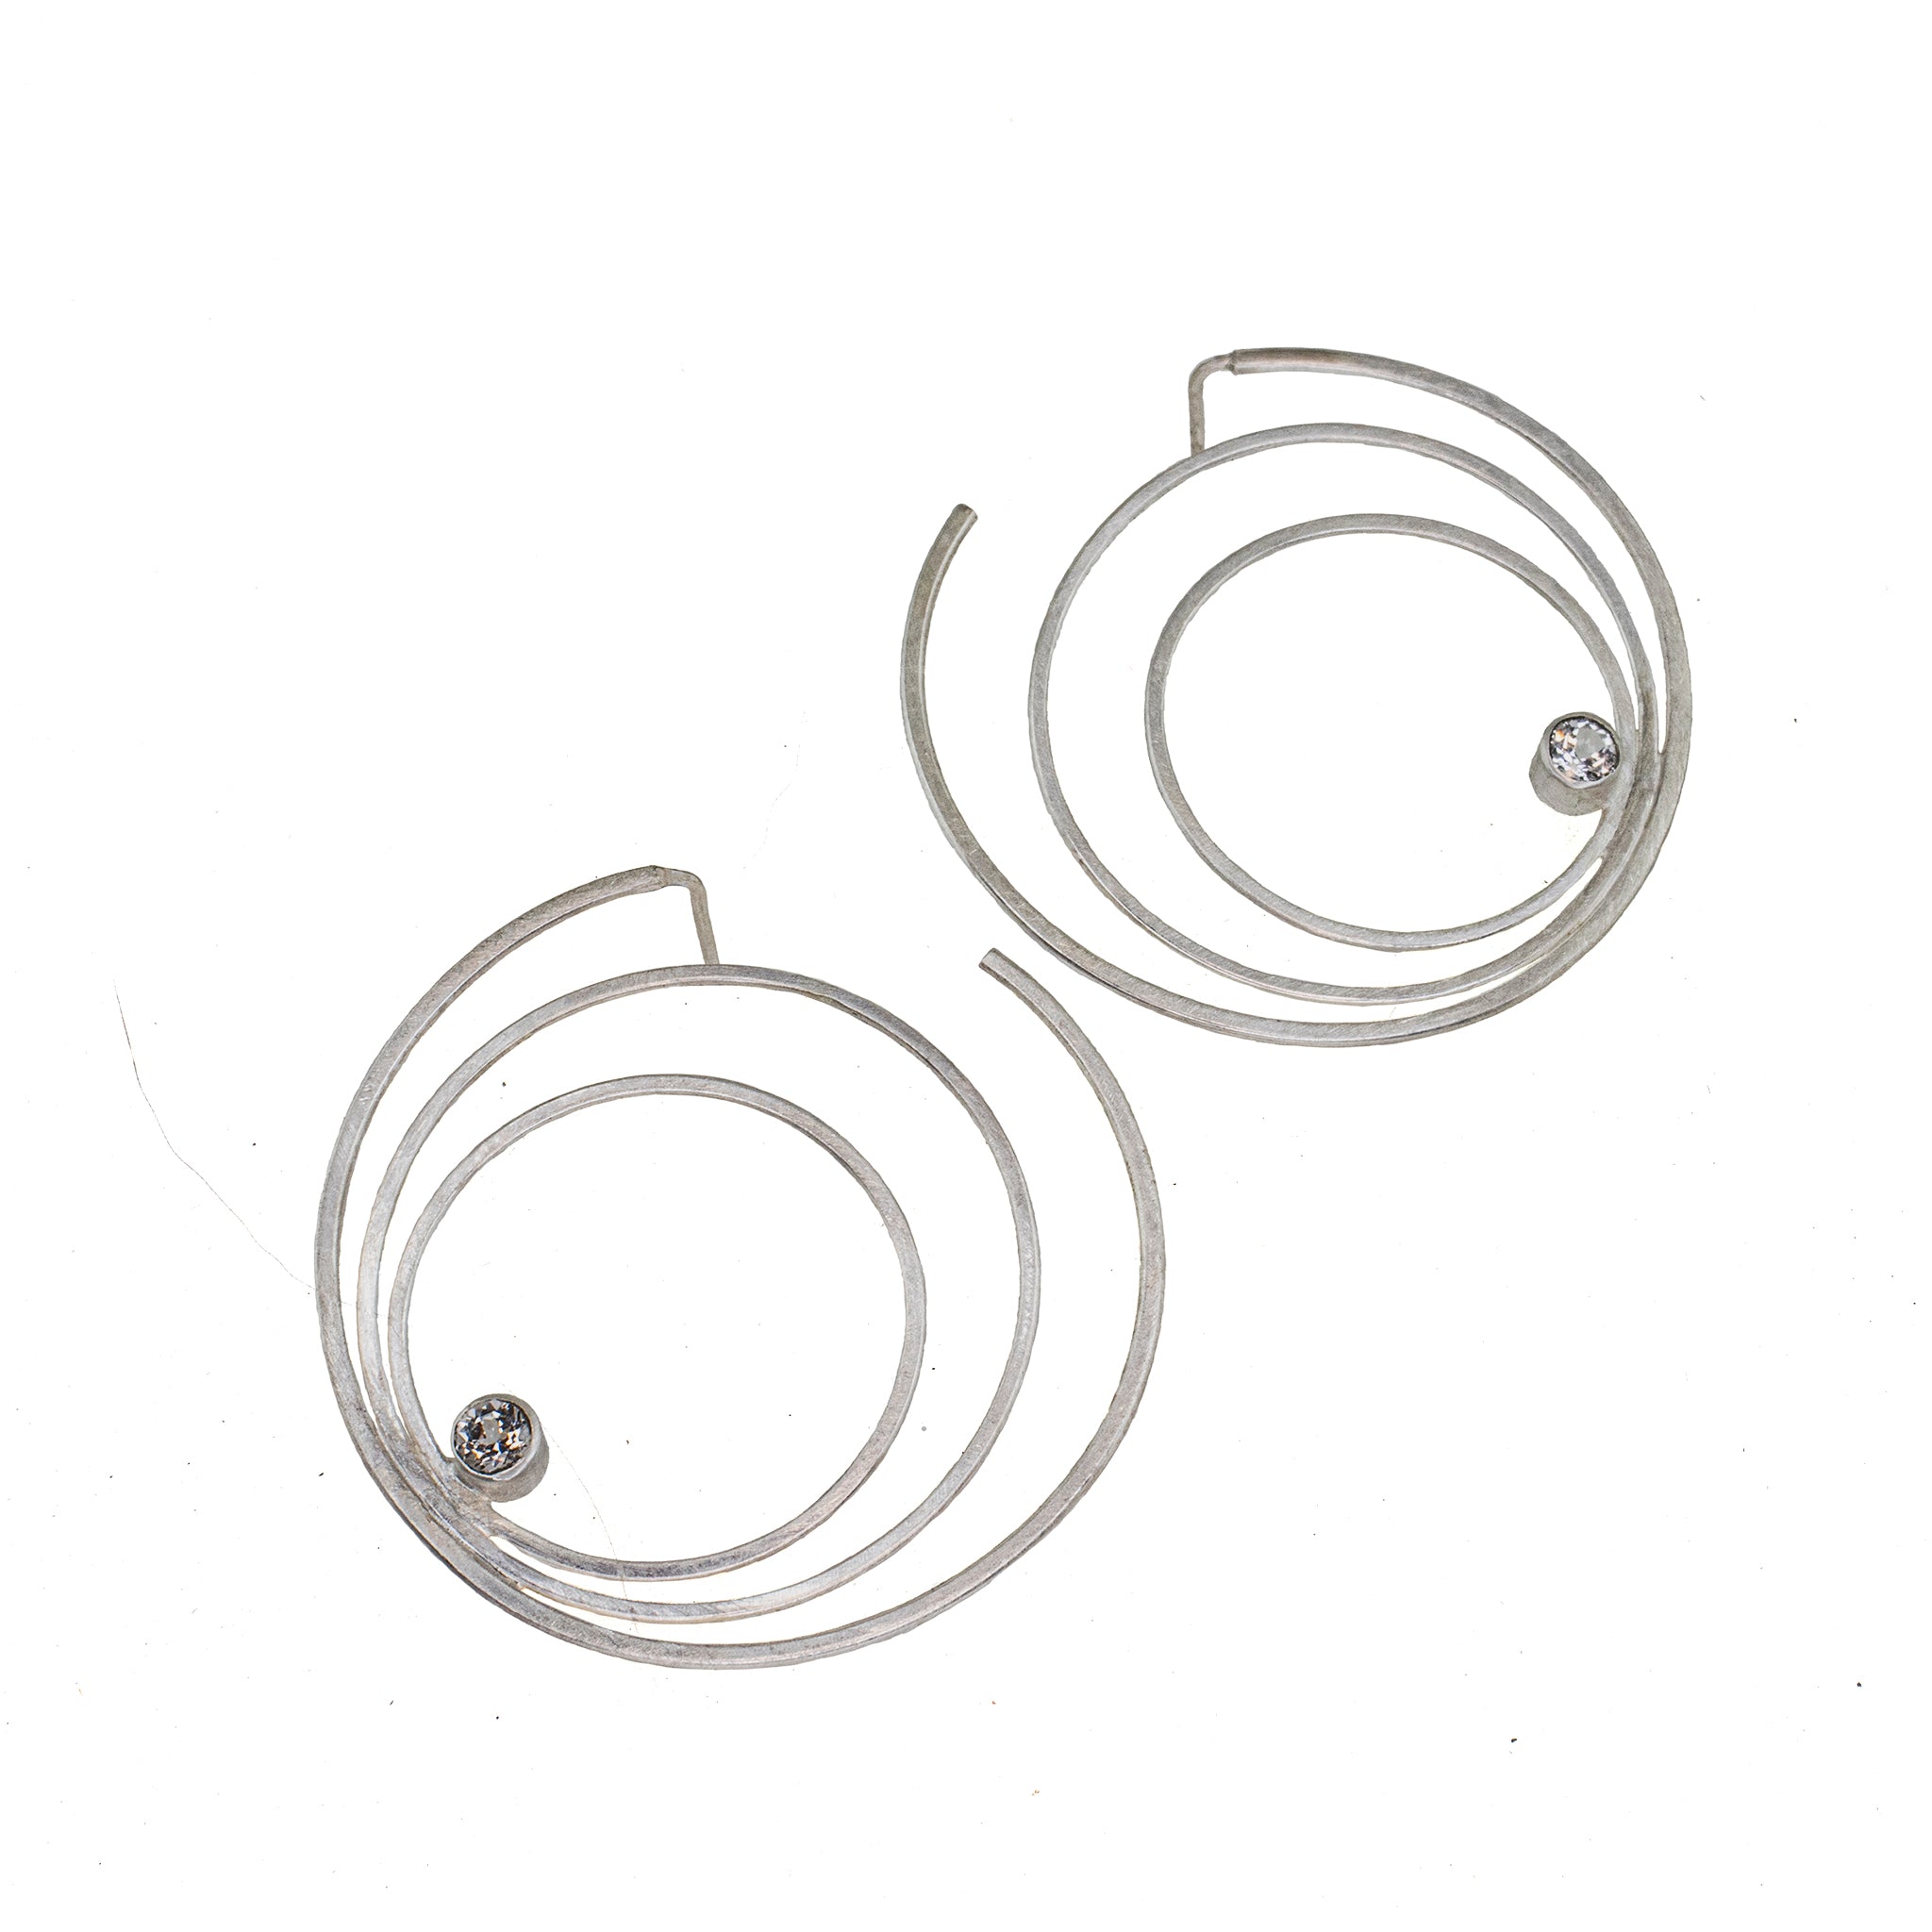 terling silver hoop earring with gemstones by eko jewelry design, Sevilla